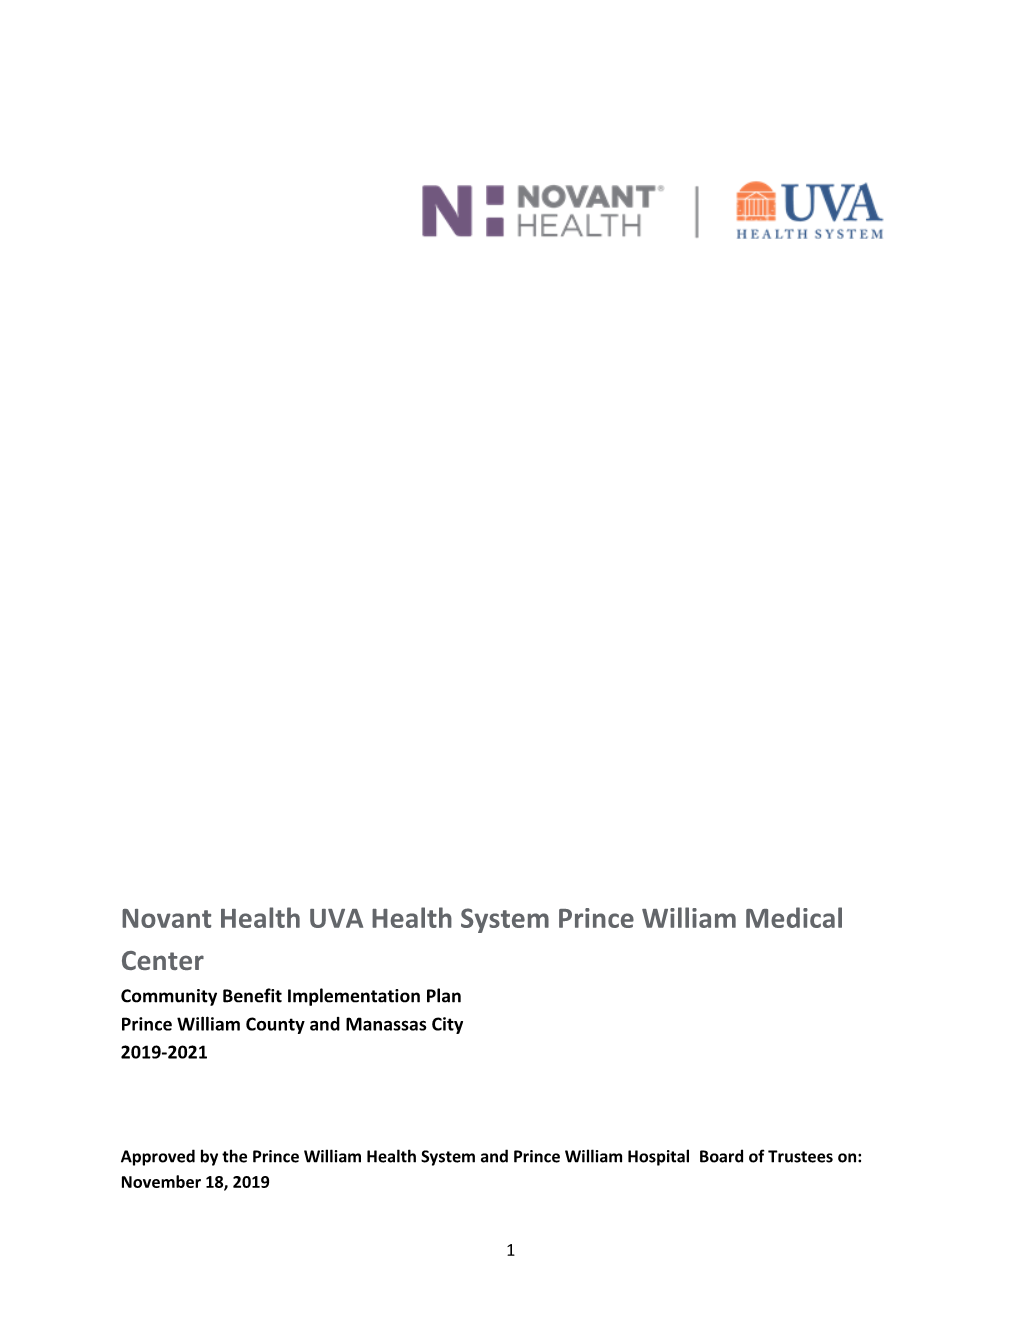 Novant Health UVA Health System Prince William Medical Center Community Benefit Implementation Plan Prince William County and Manassas City 2019-2021